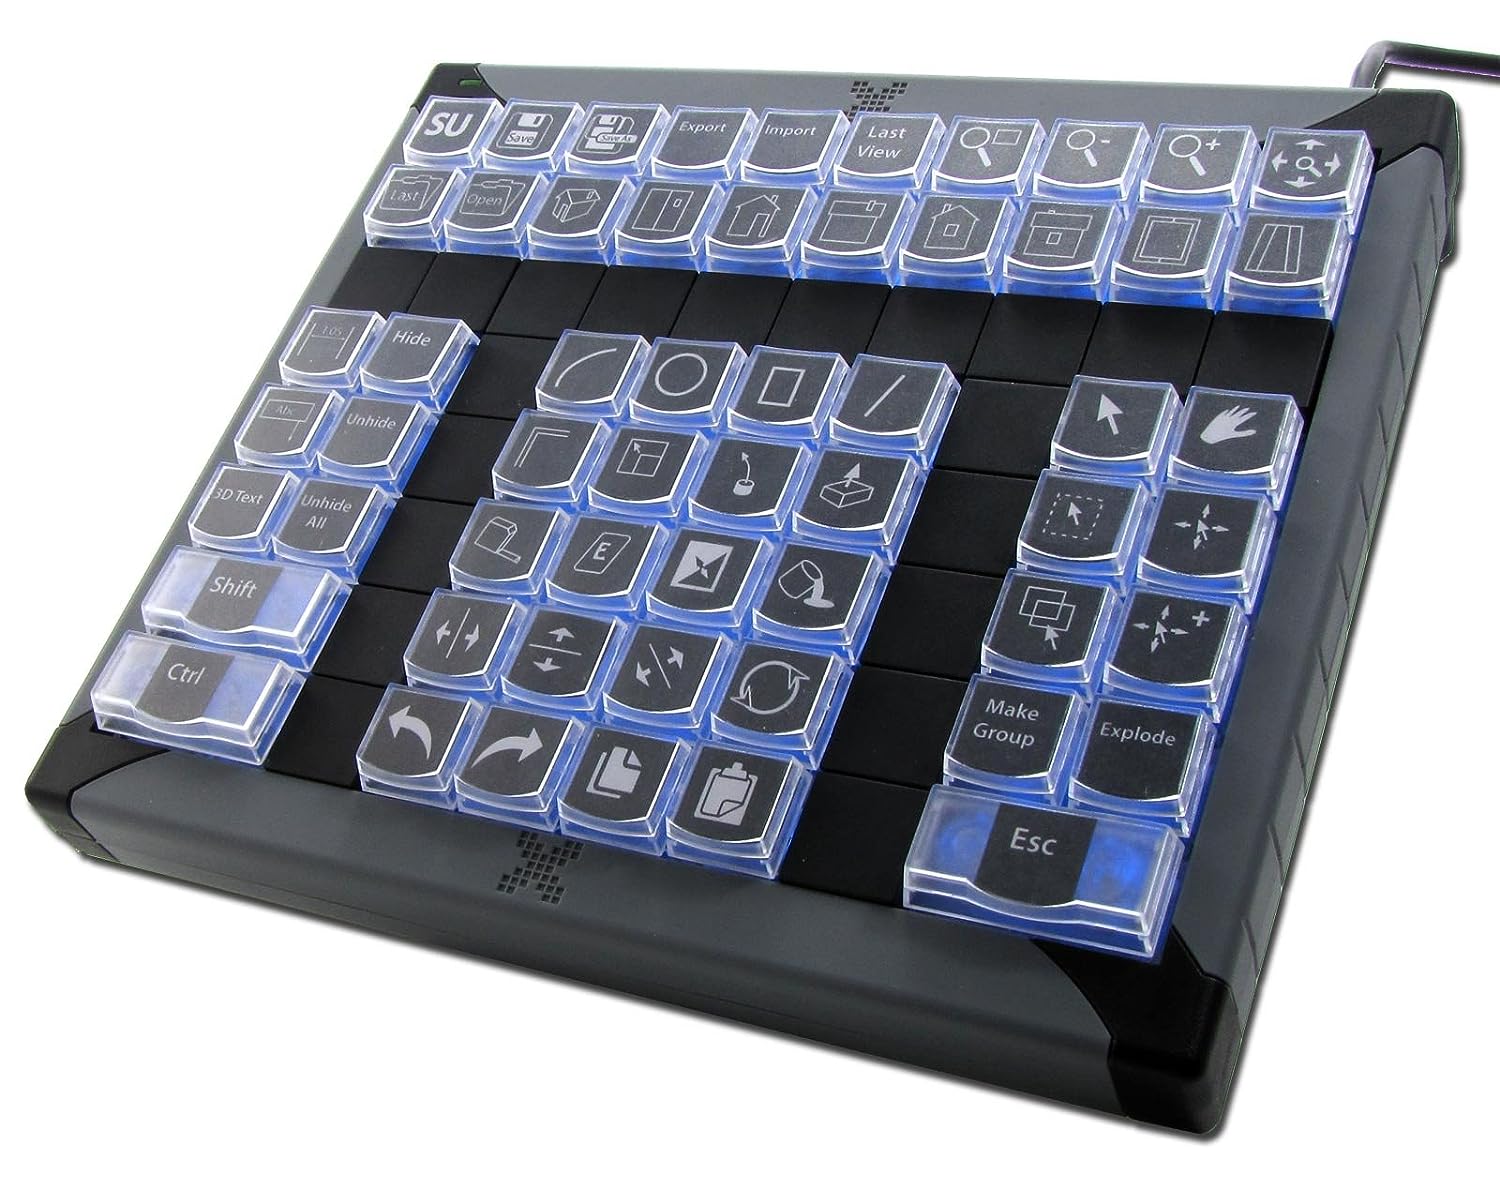 XKEYS 60 Keys Programmable Keyboards - Individual Addressable Backlighting Under Each Key